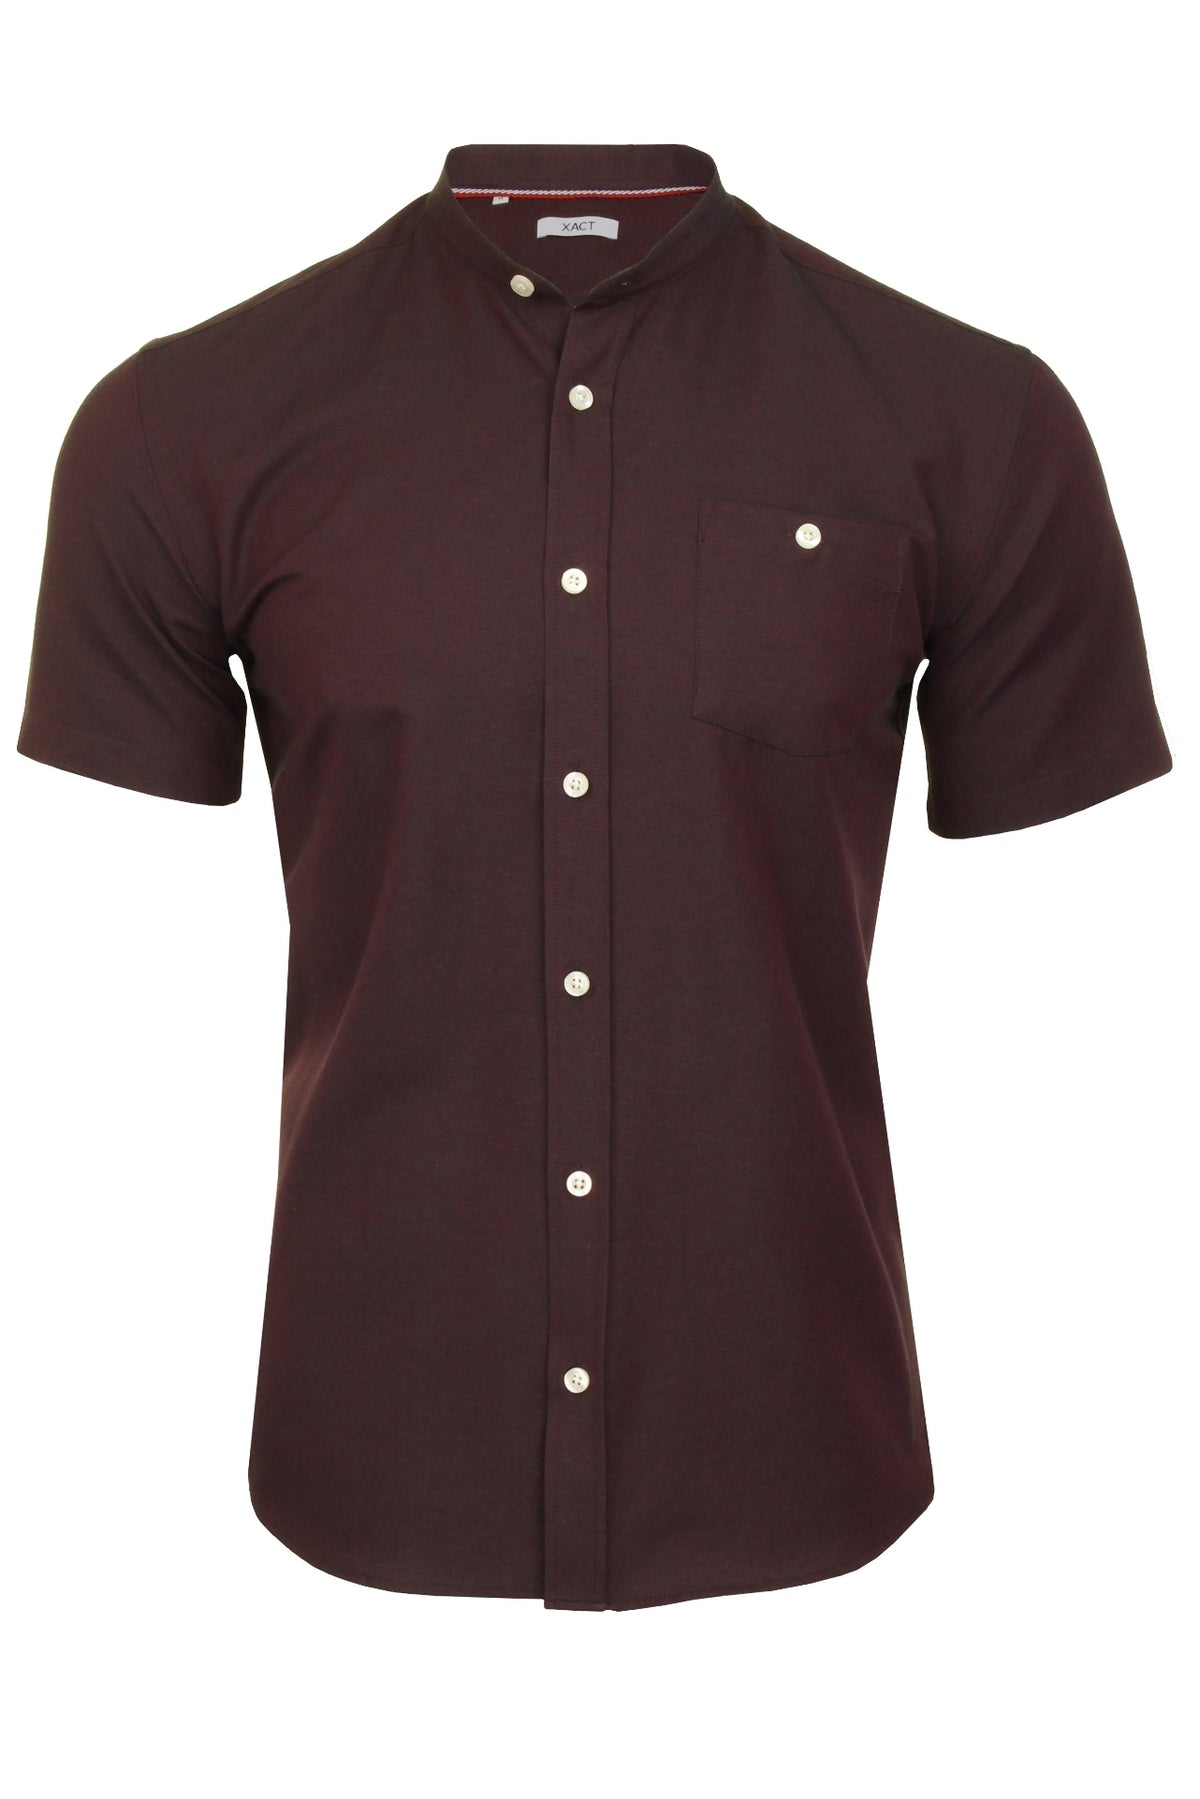 Xact Men's Grandad Collar Oxford Shirt Slim Fit Short Sleeved, 01, Xsh1022, Dark Burgundy